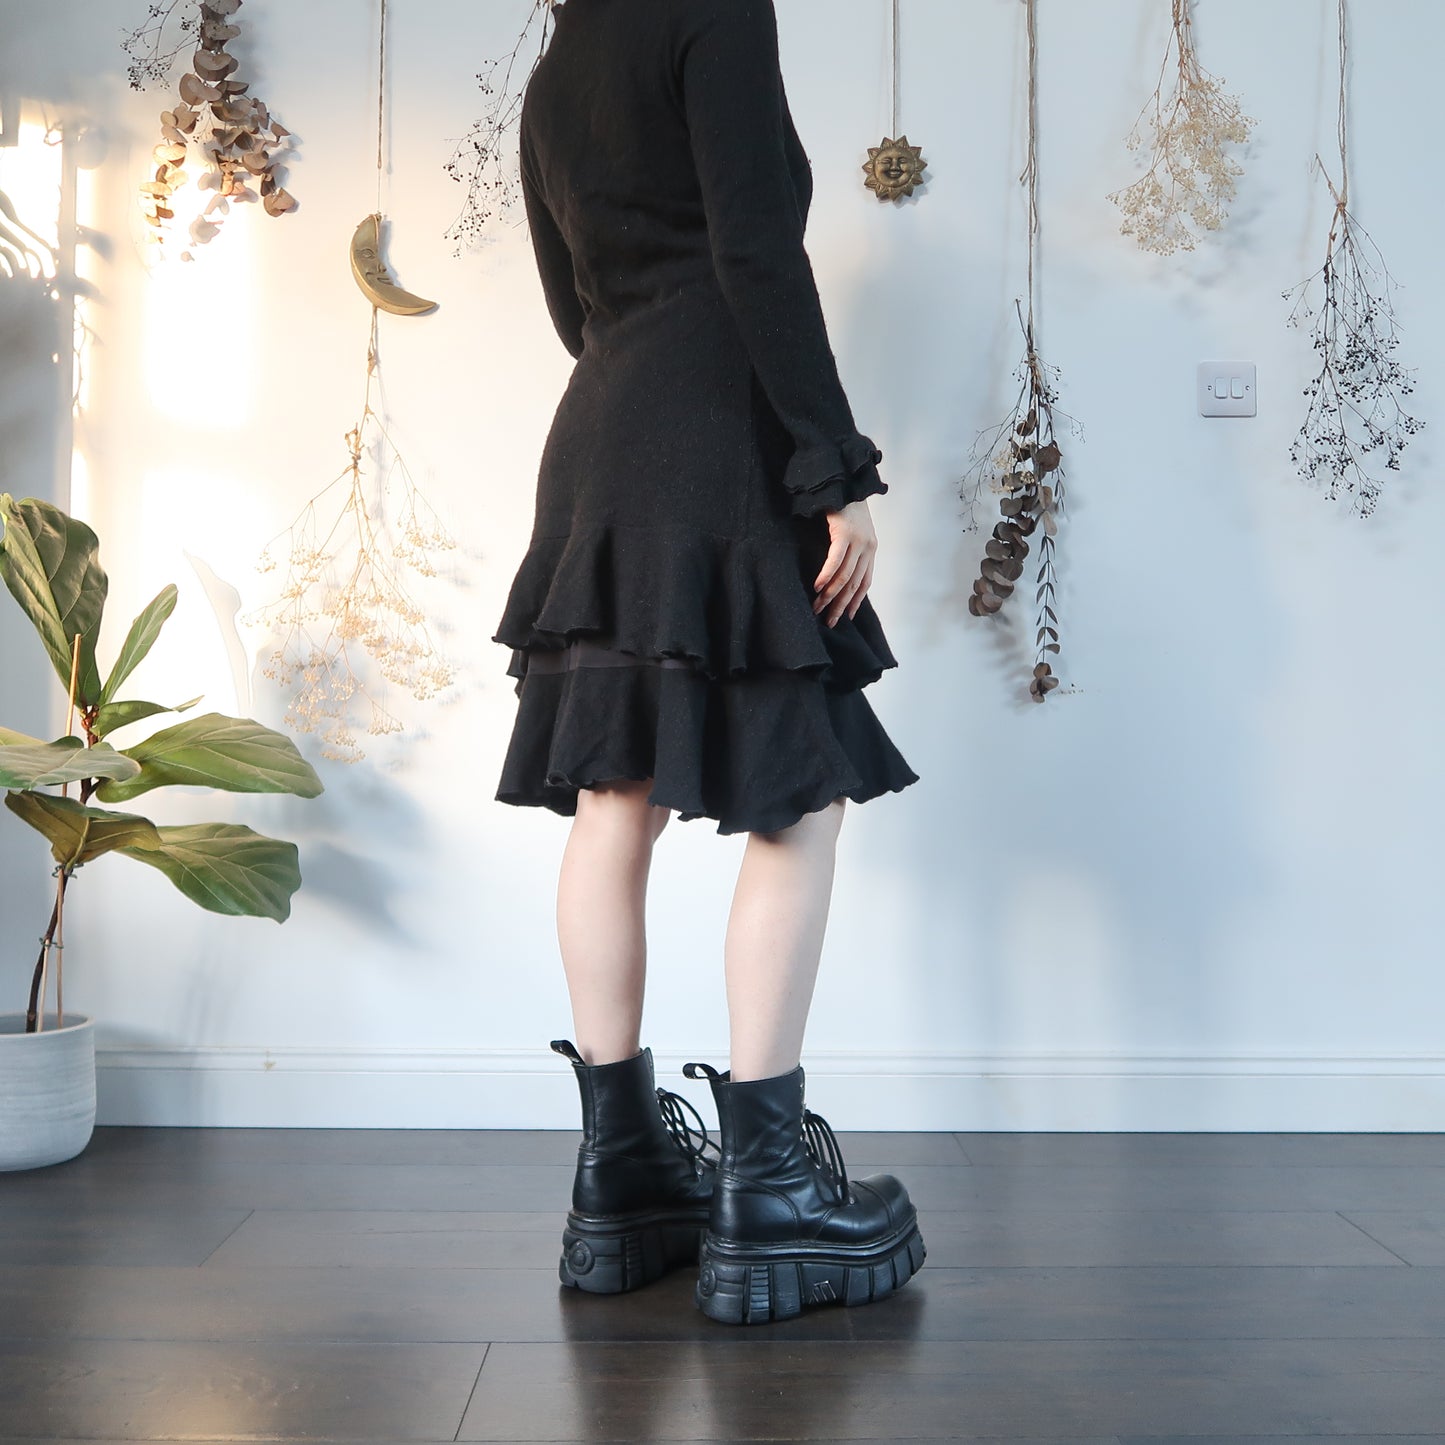 Black knit dress - size M/L